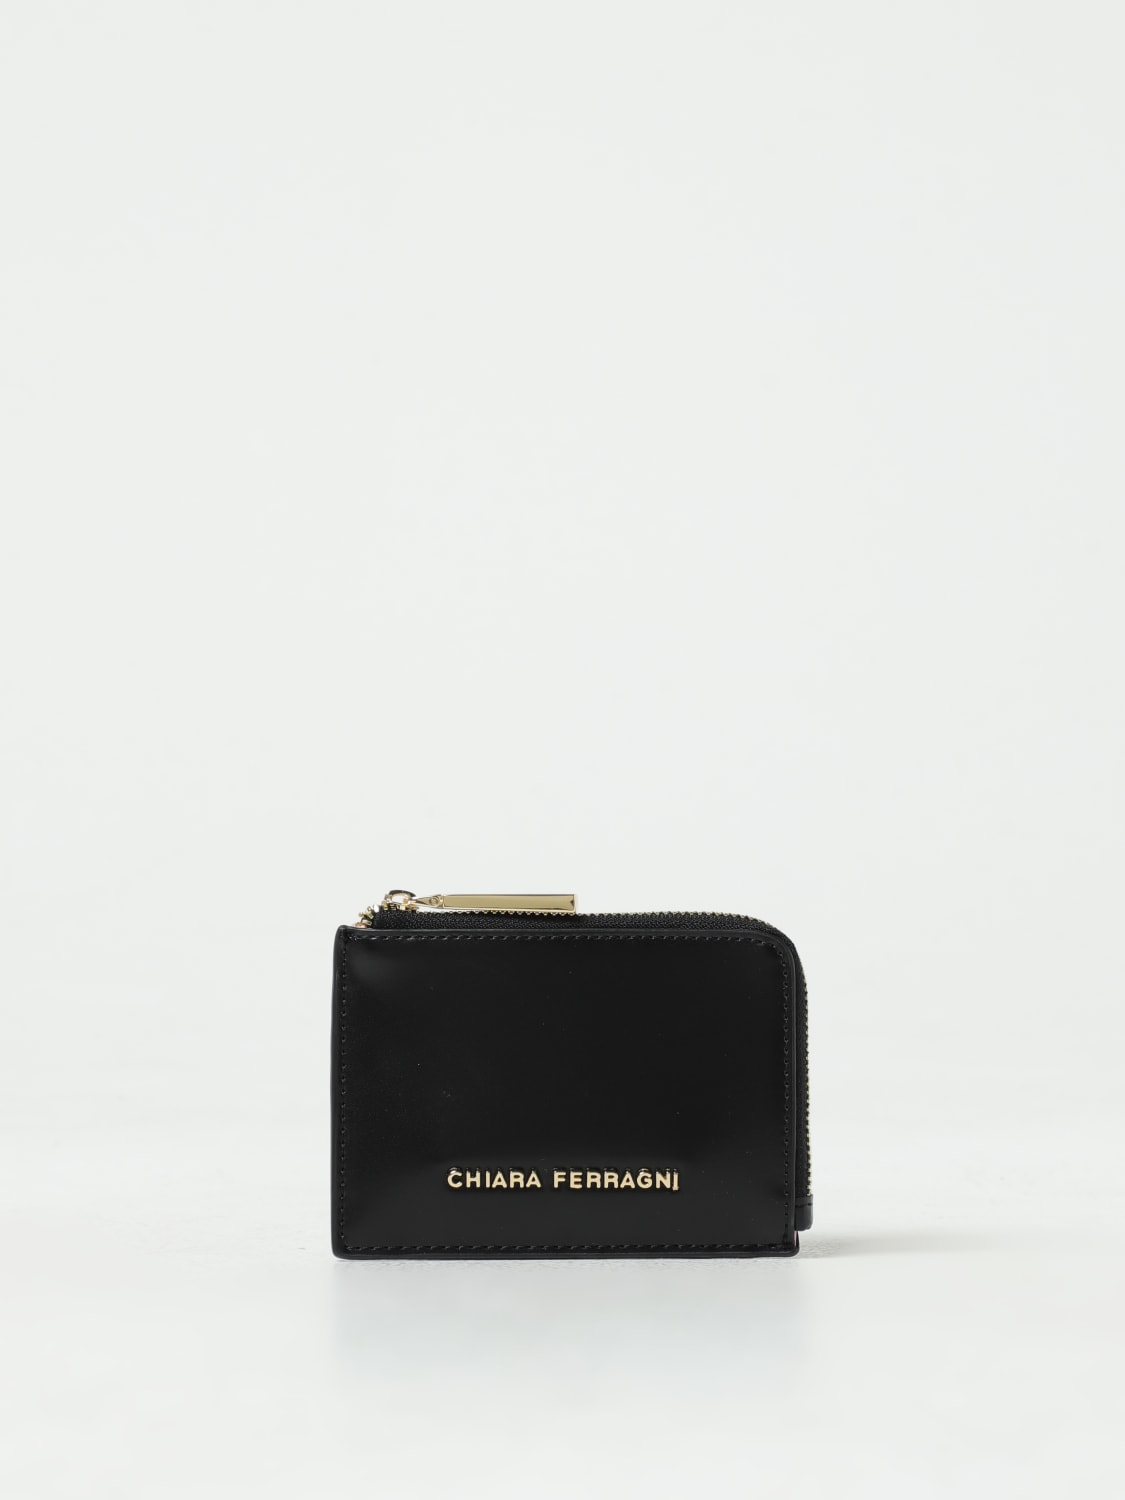 CHIARA FERRAGNI: Wallet woman - Black | CHIARA FERRAGNI wallet ...